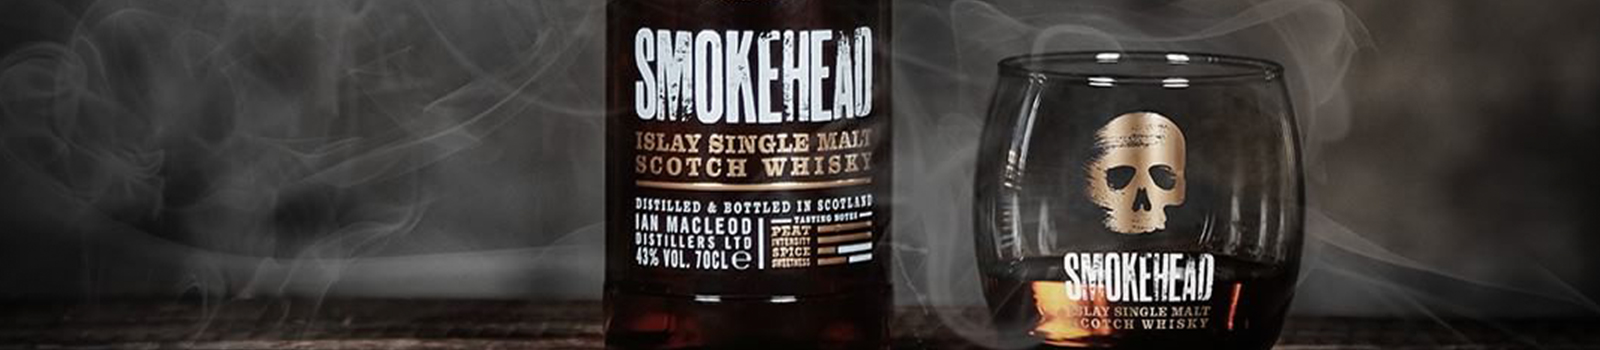 Smokehead Whisky, Ian Macleod, Trajectory Beverage Partners